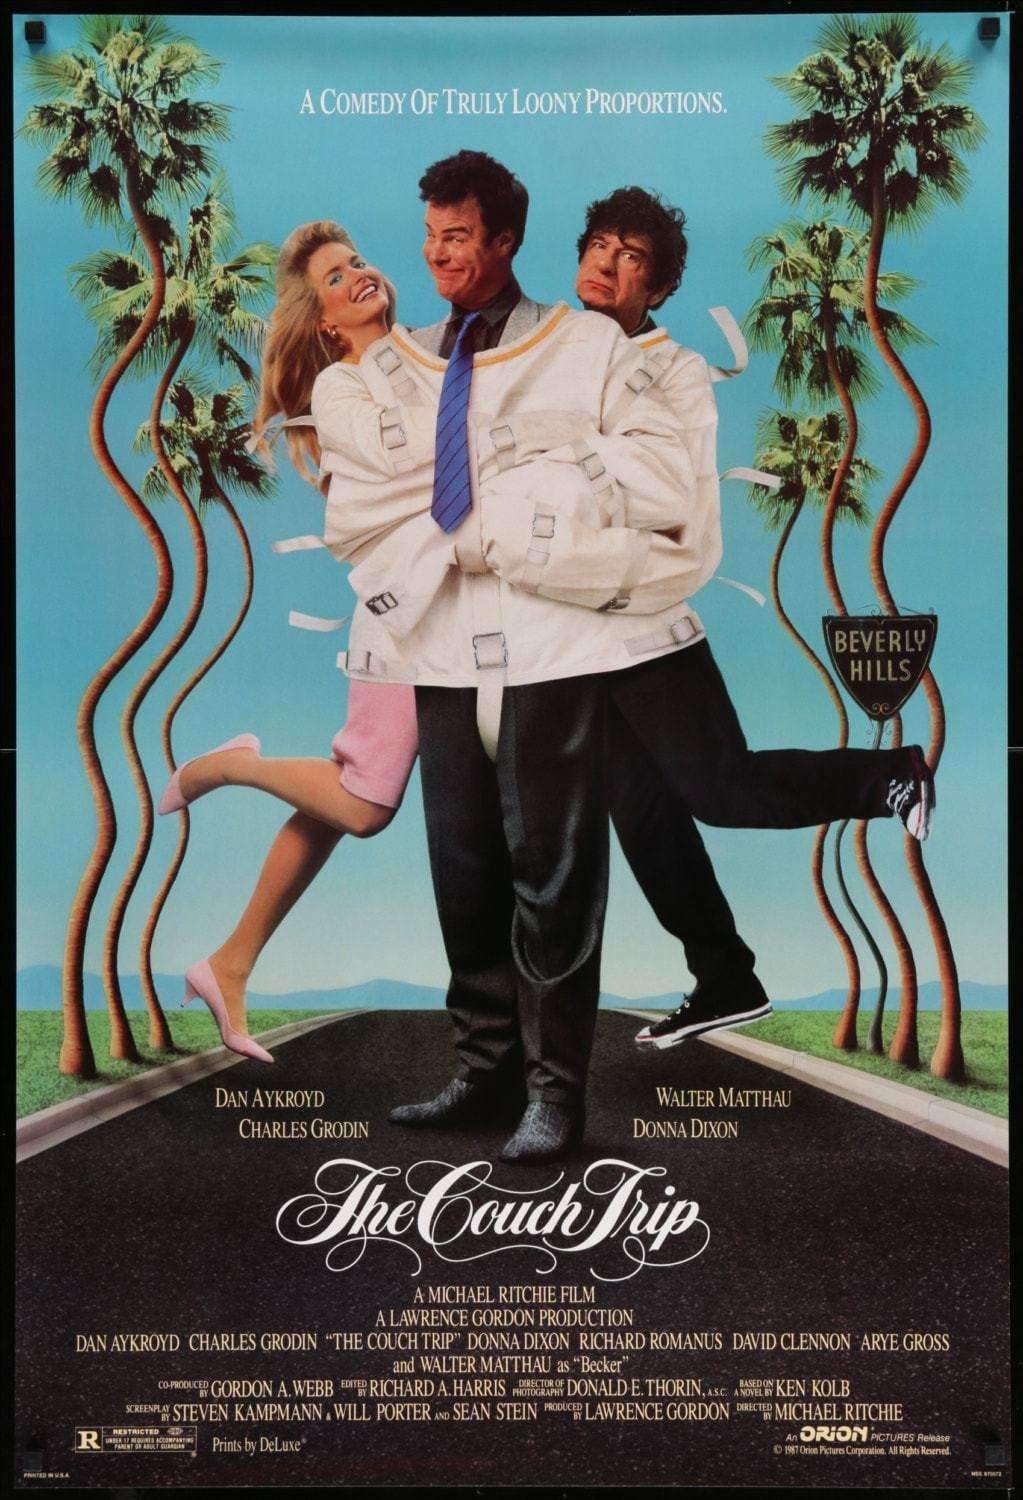 Couch Trip (1988) original movie poster for sale at Original Film Art